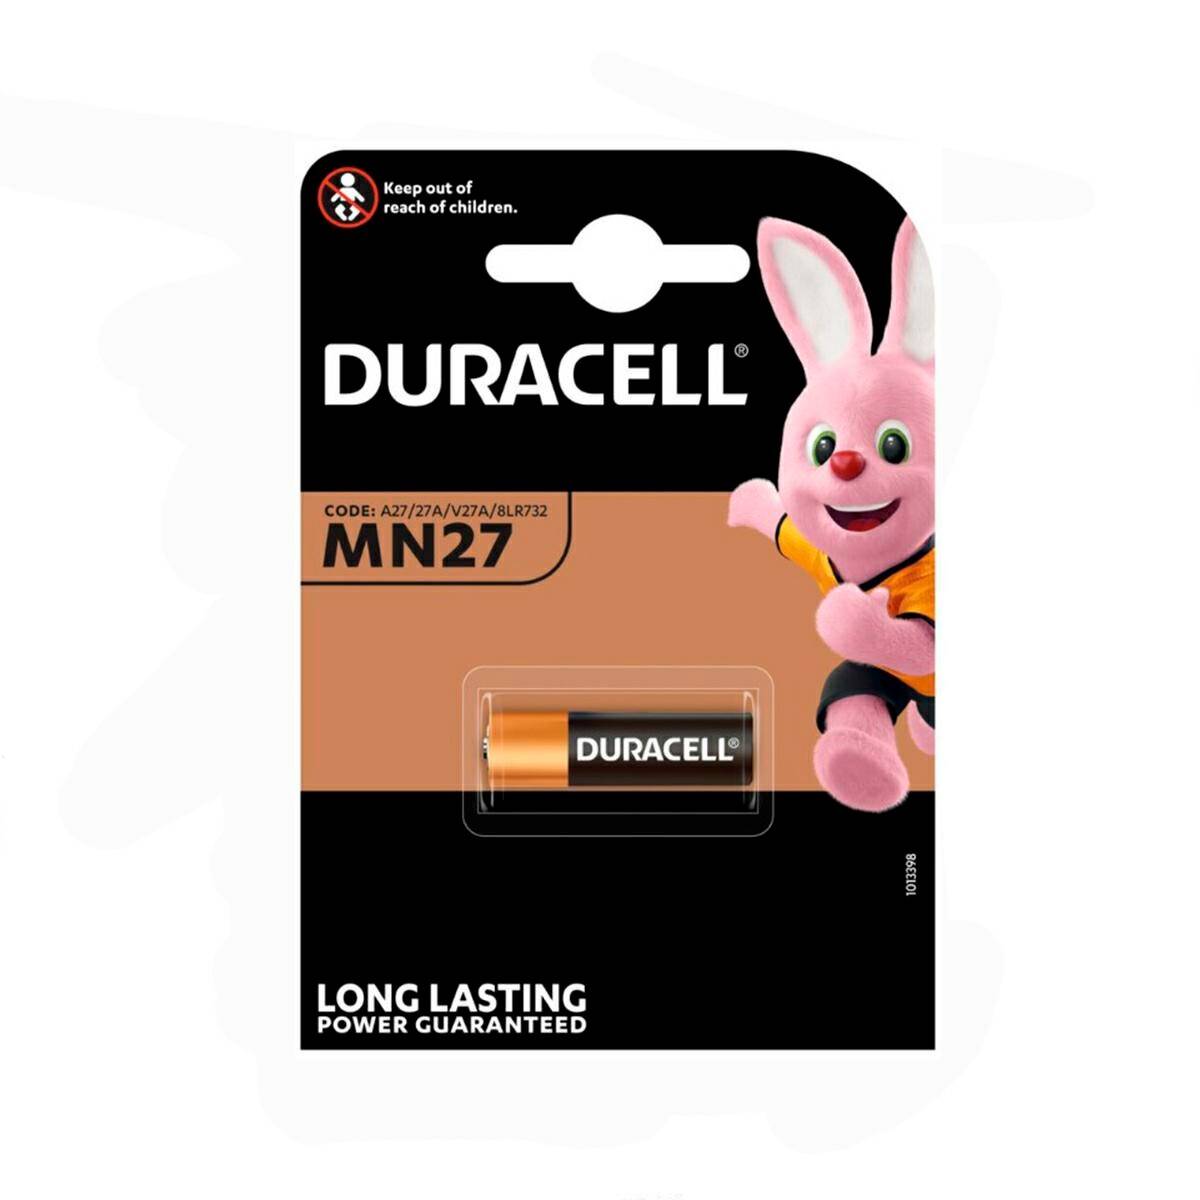 Battery Duracell MN27 8LR732 12V 1 pcs